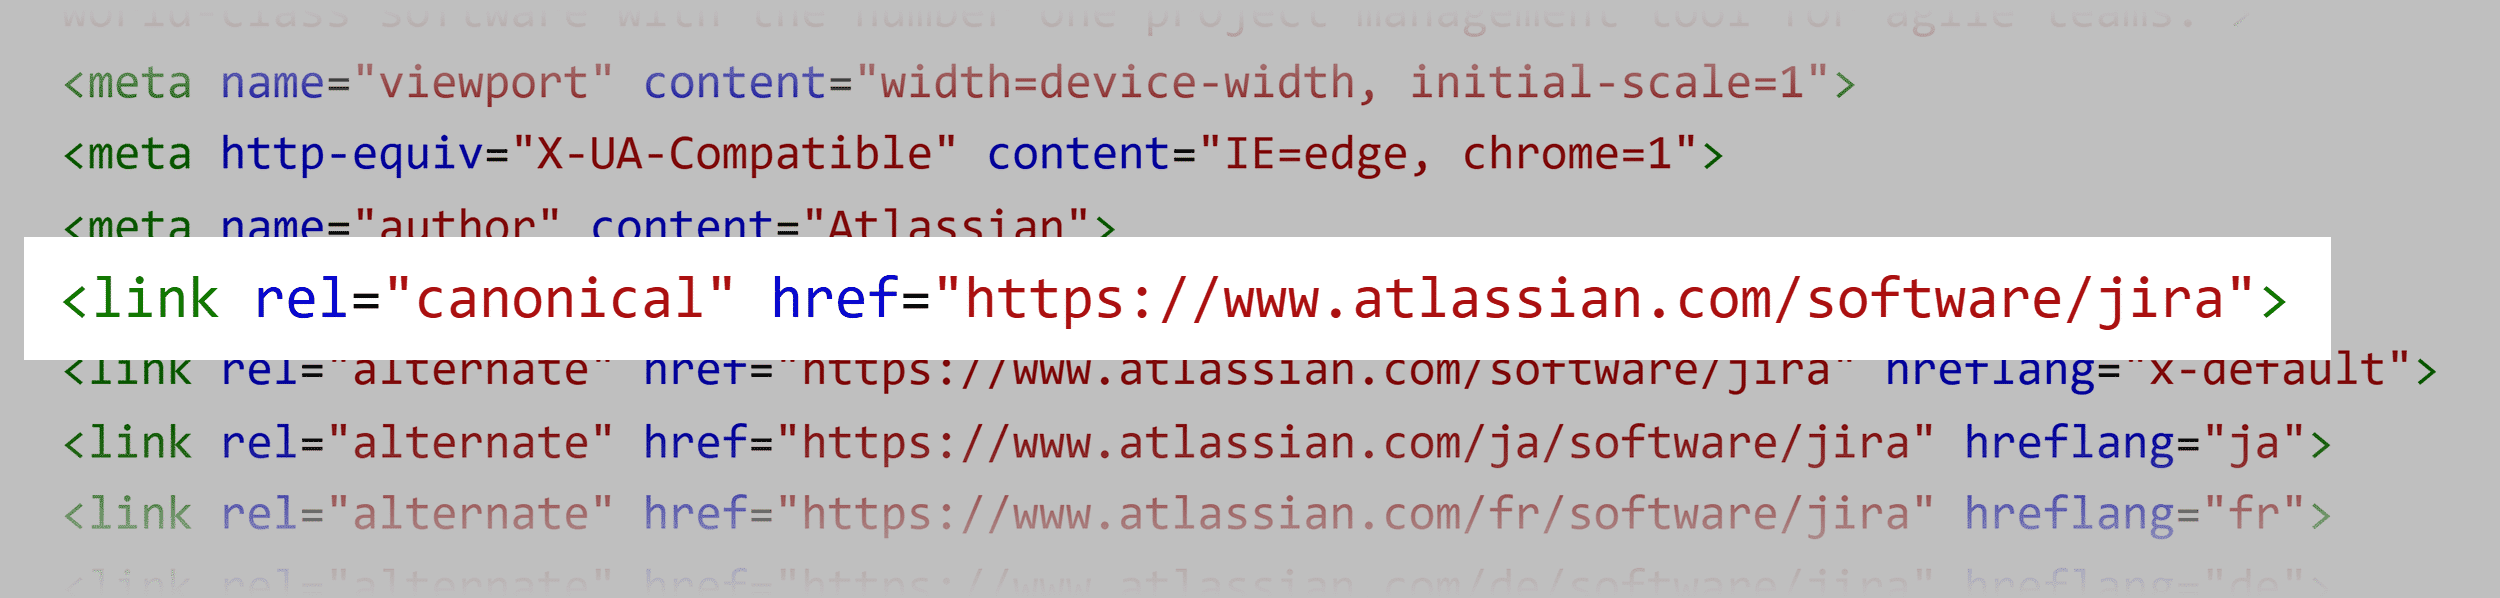 Atlassian – Canonical URL